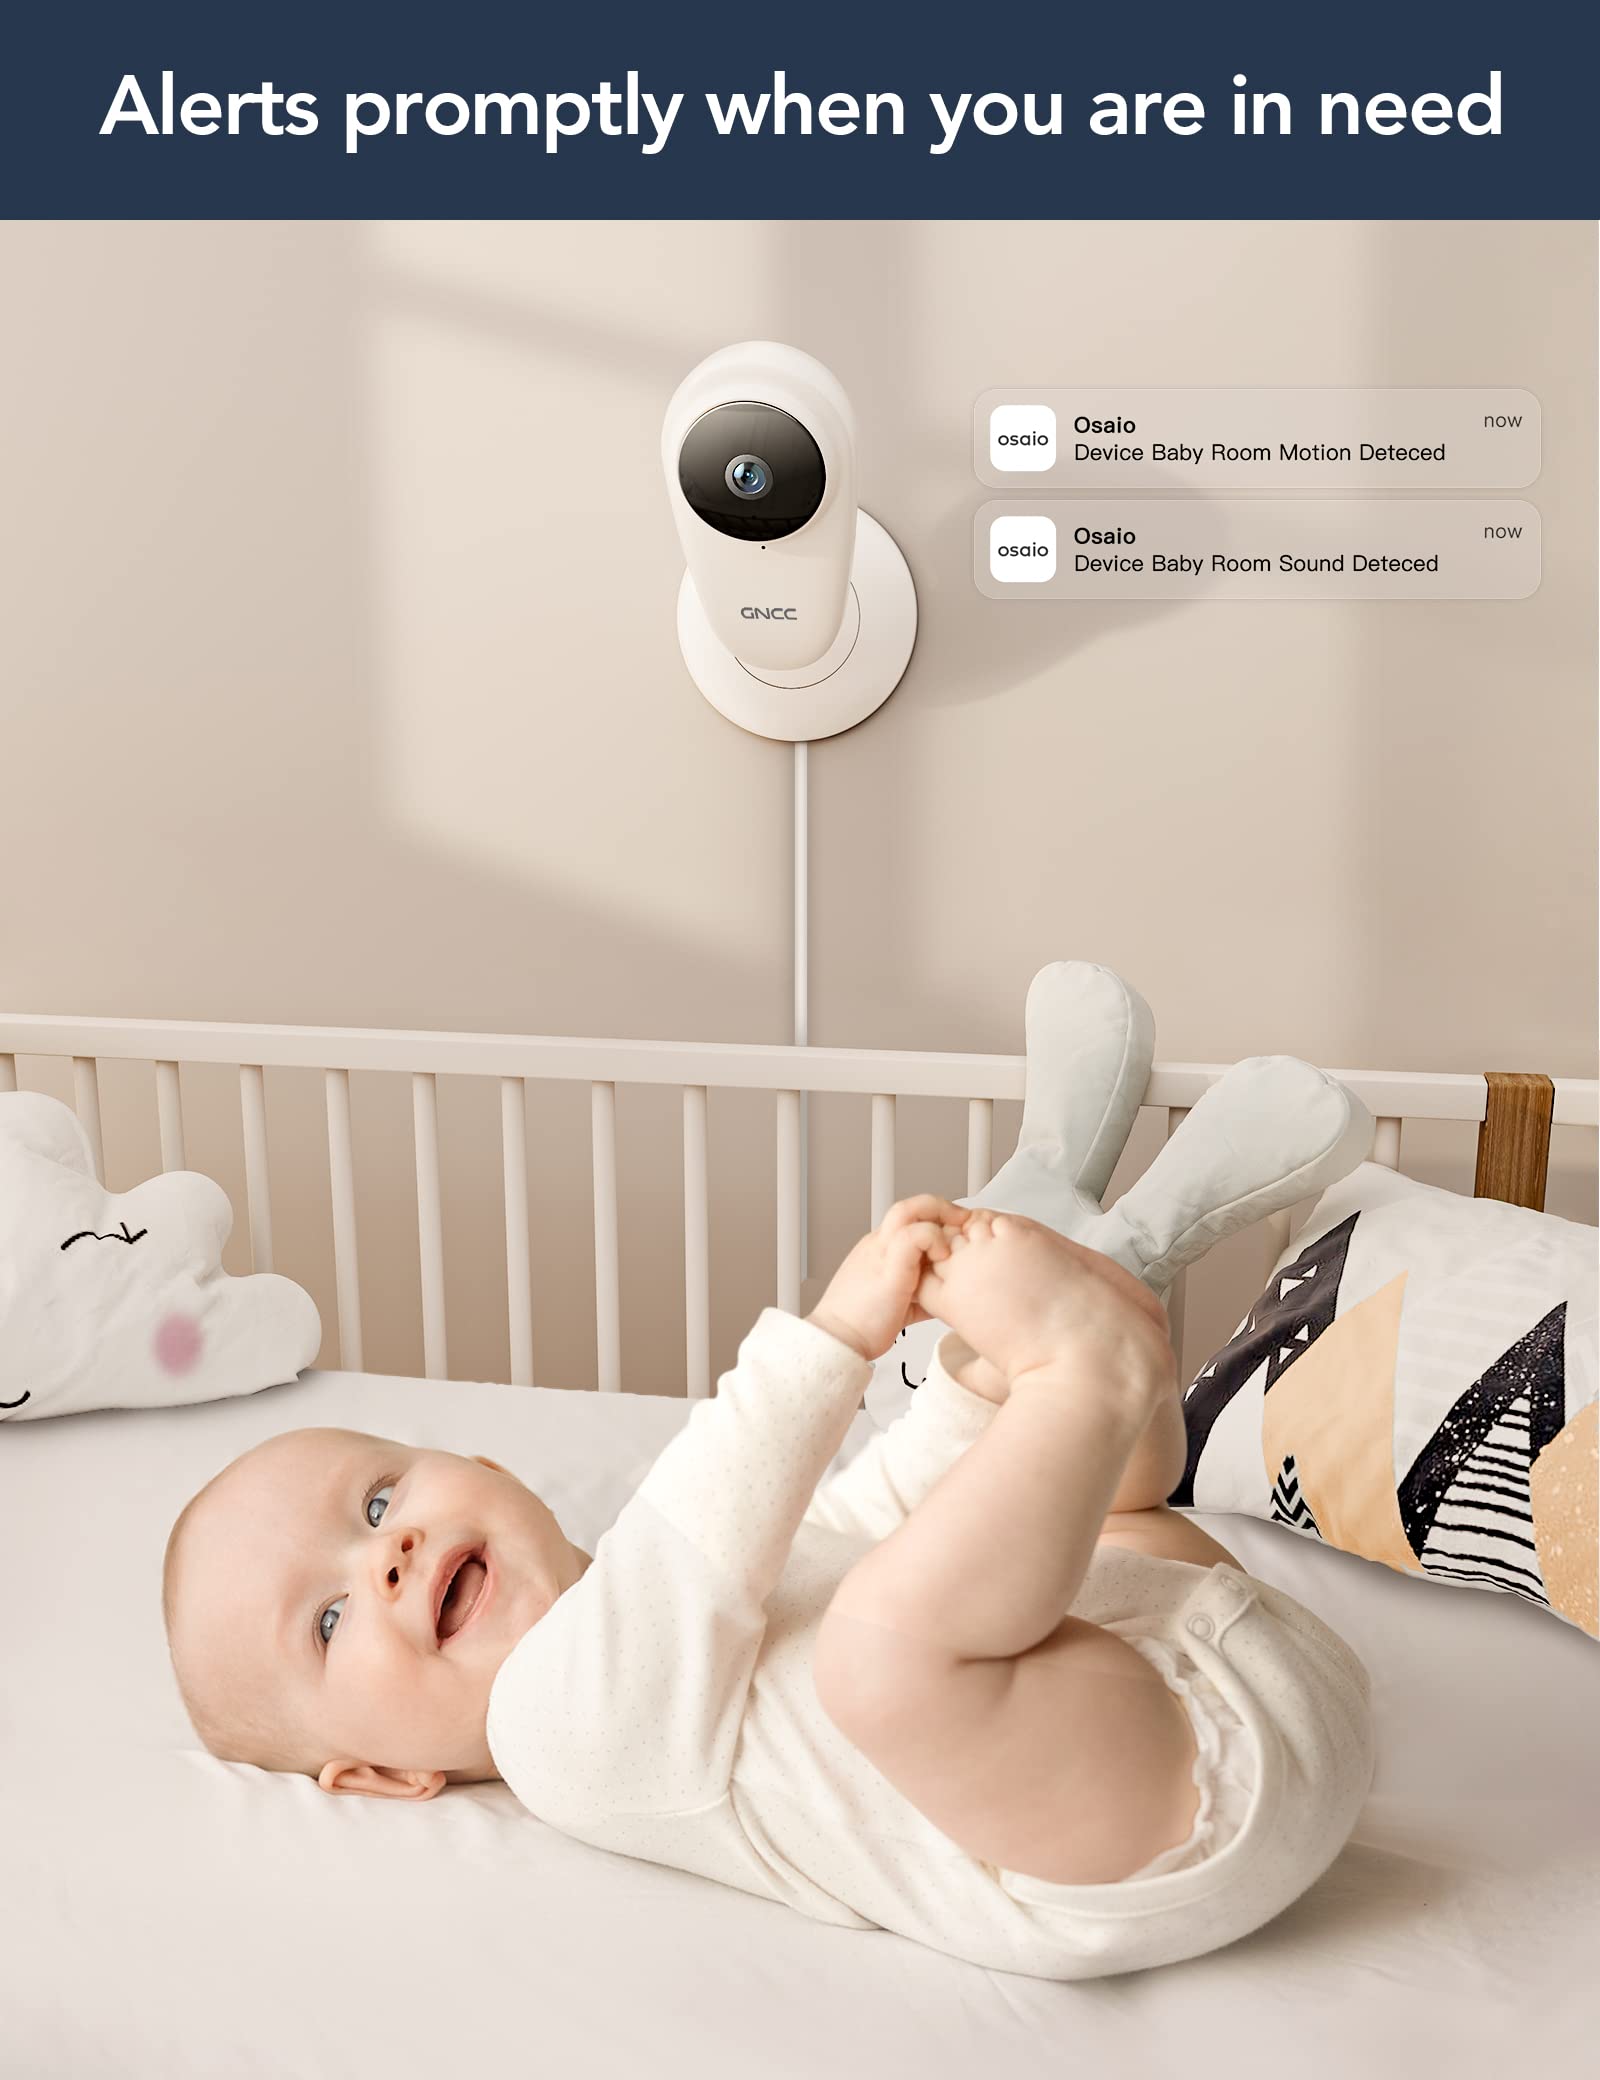 Telecamera baby monitor GNCC C1Pro 2k con visione notturna